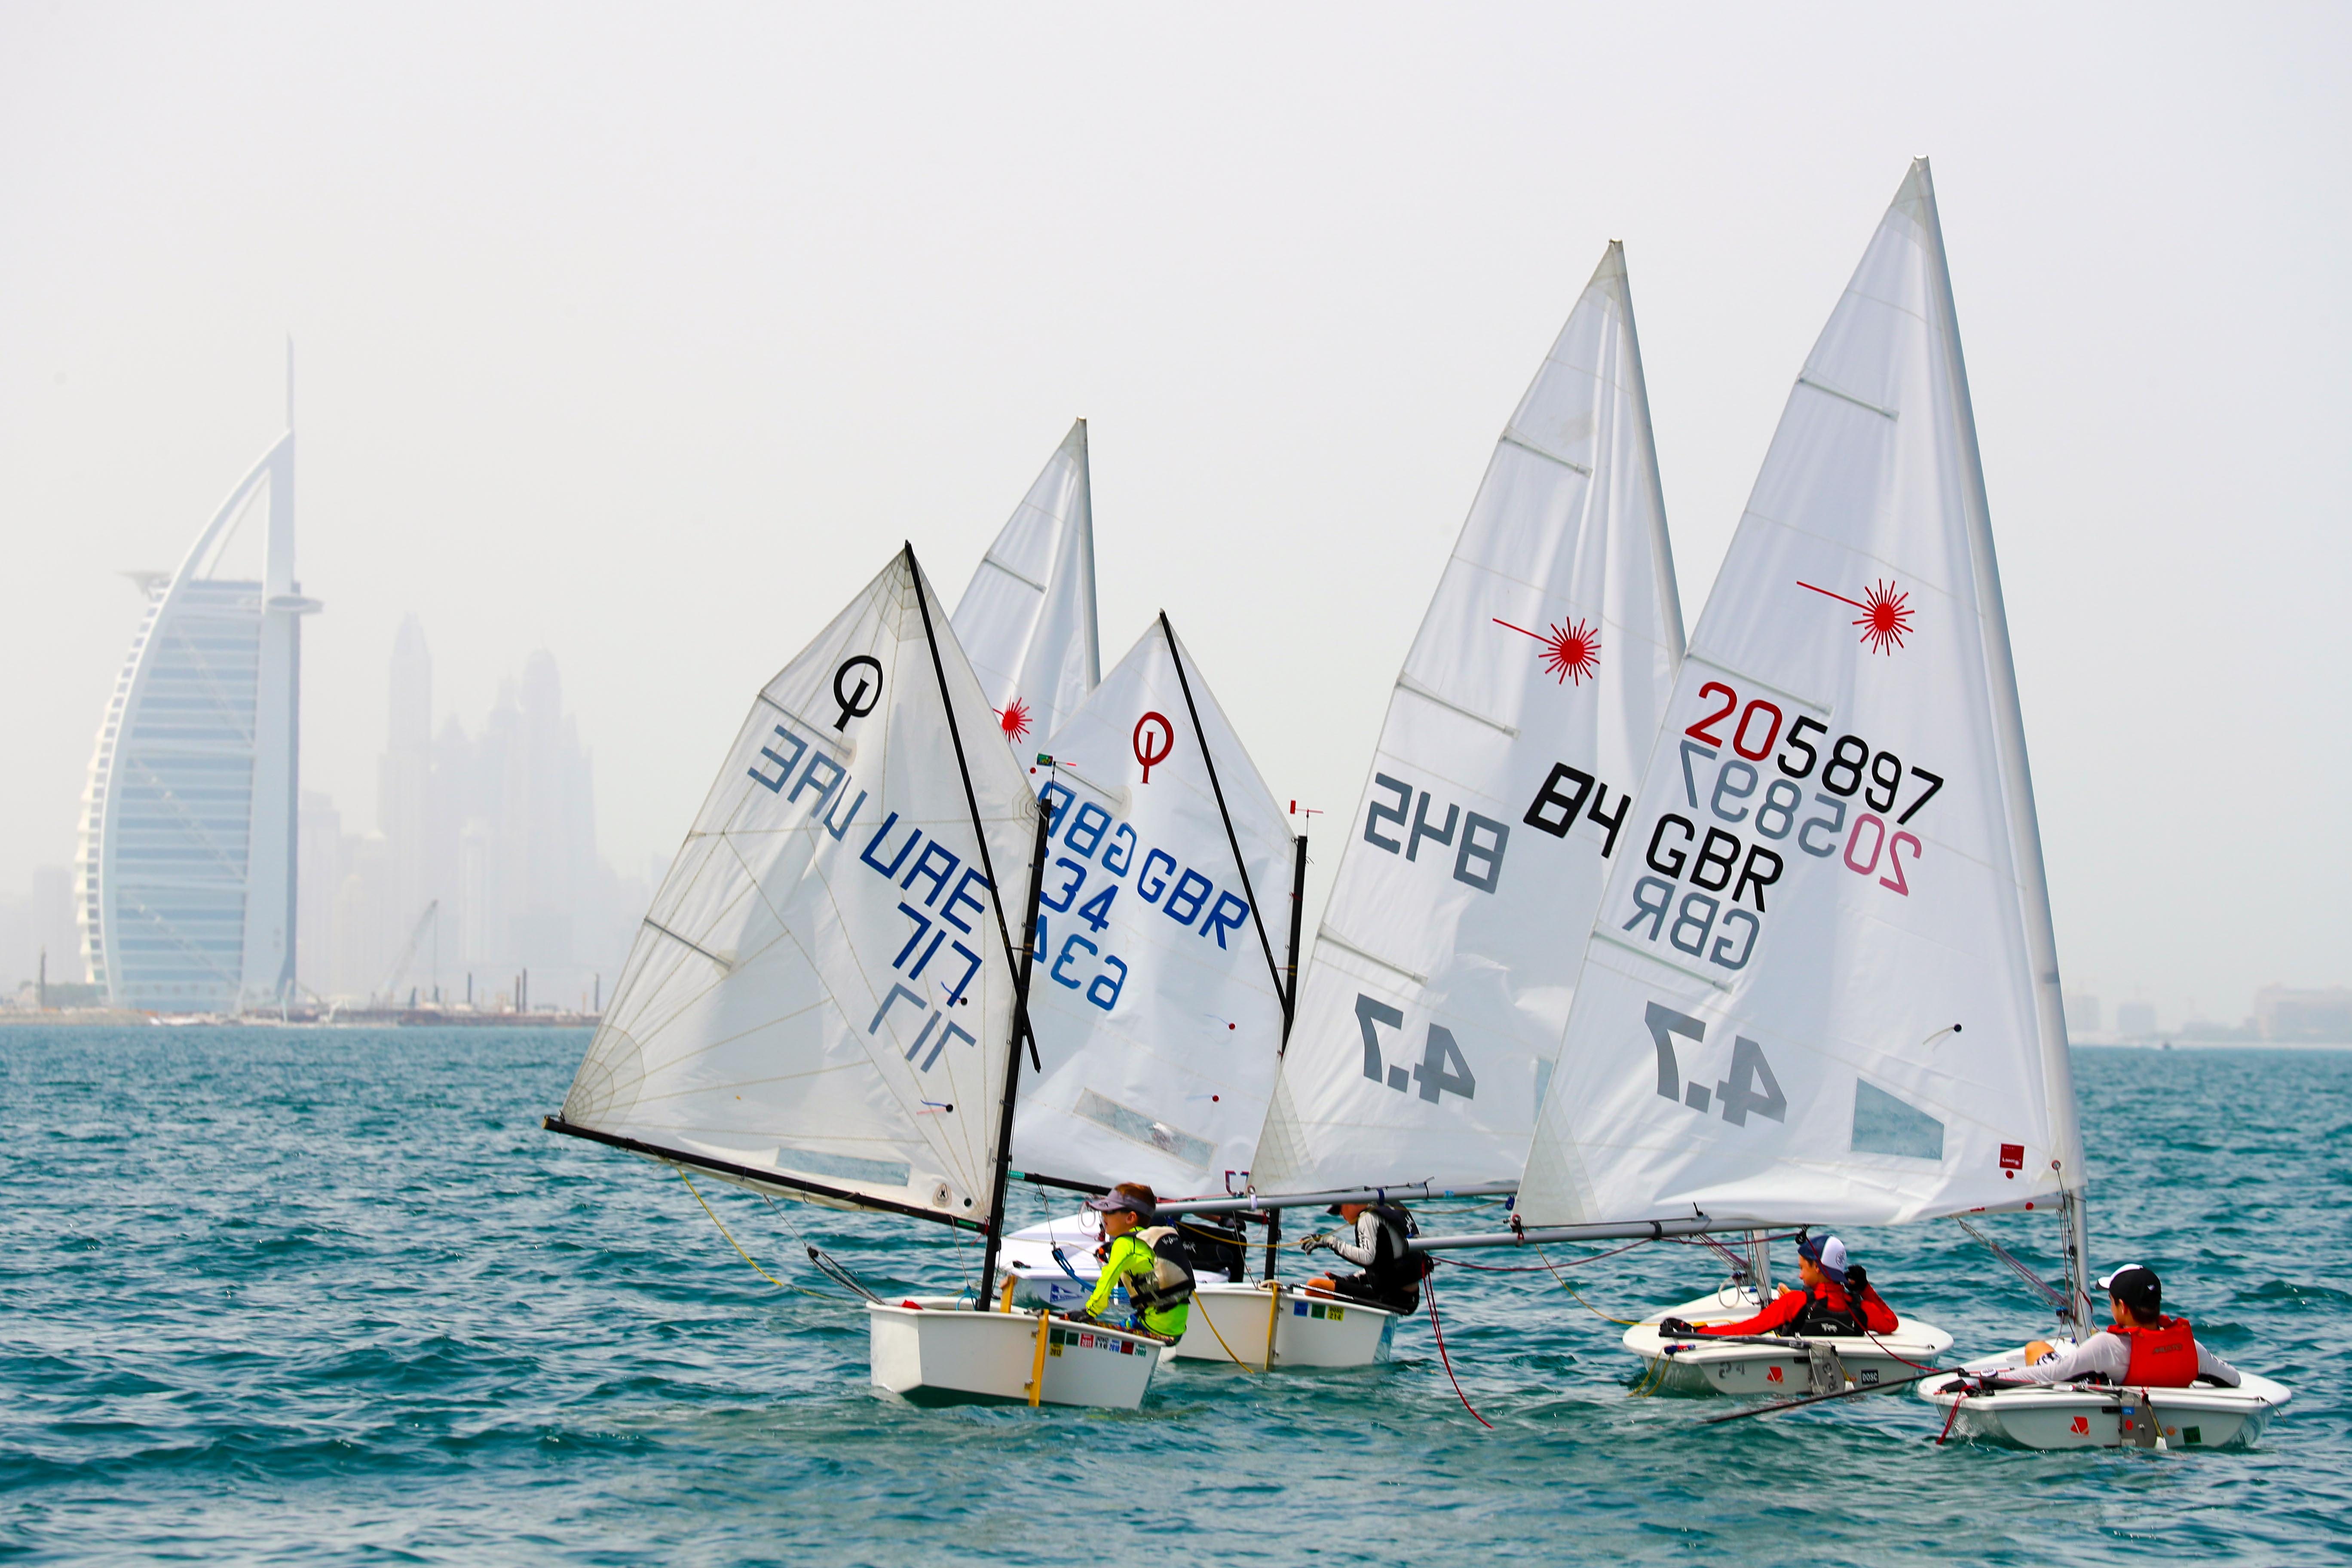 Dubai Junior Regatta returns to Jumeirah Beach on Saturday